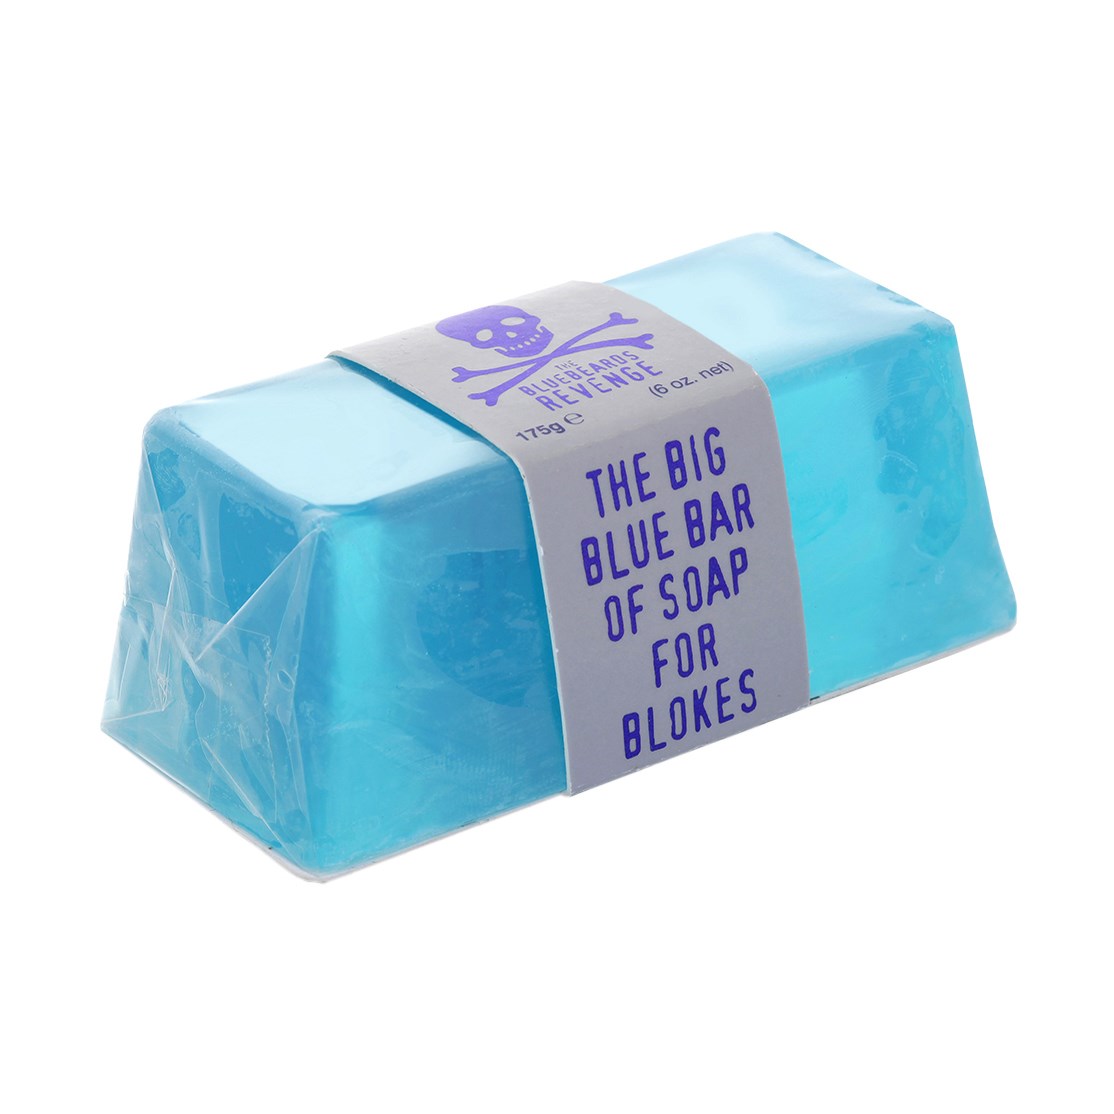 The Bluebeards Revenge Big Blue Bar Soap